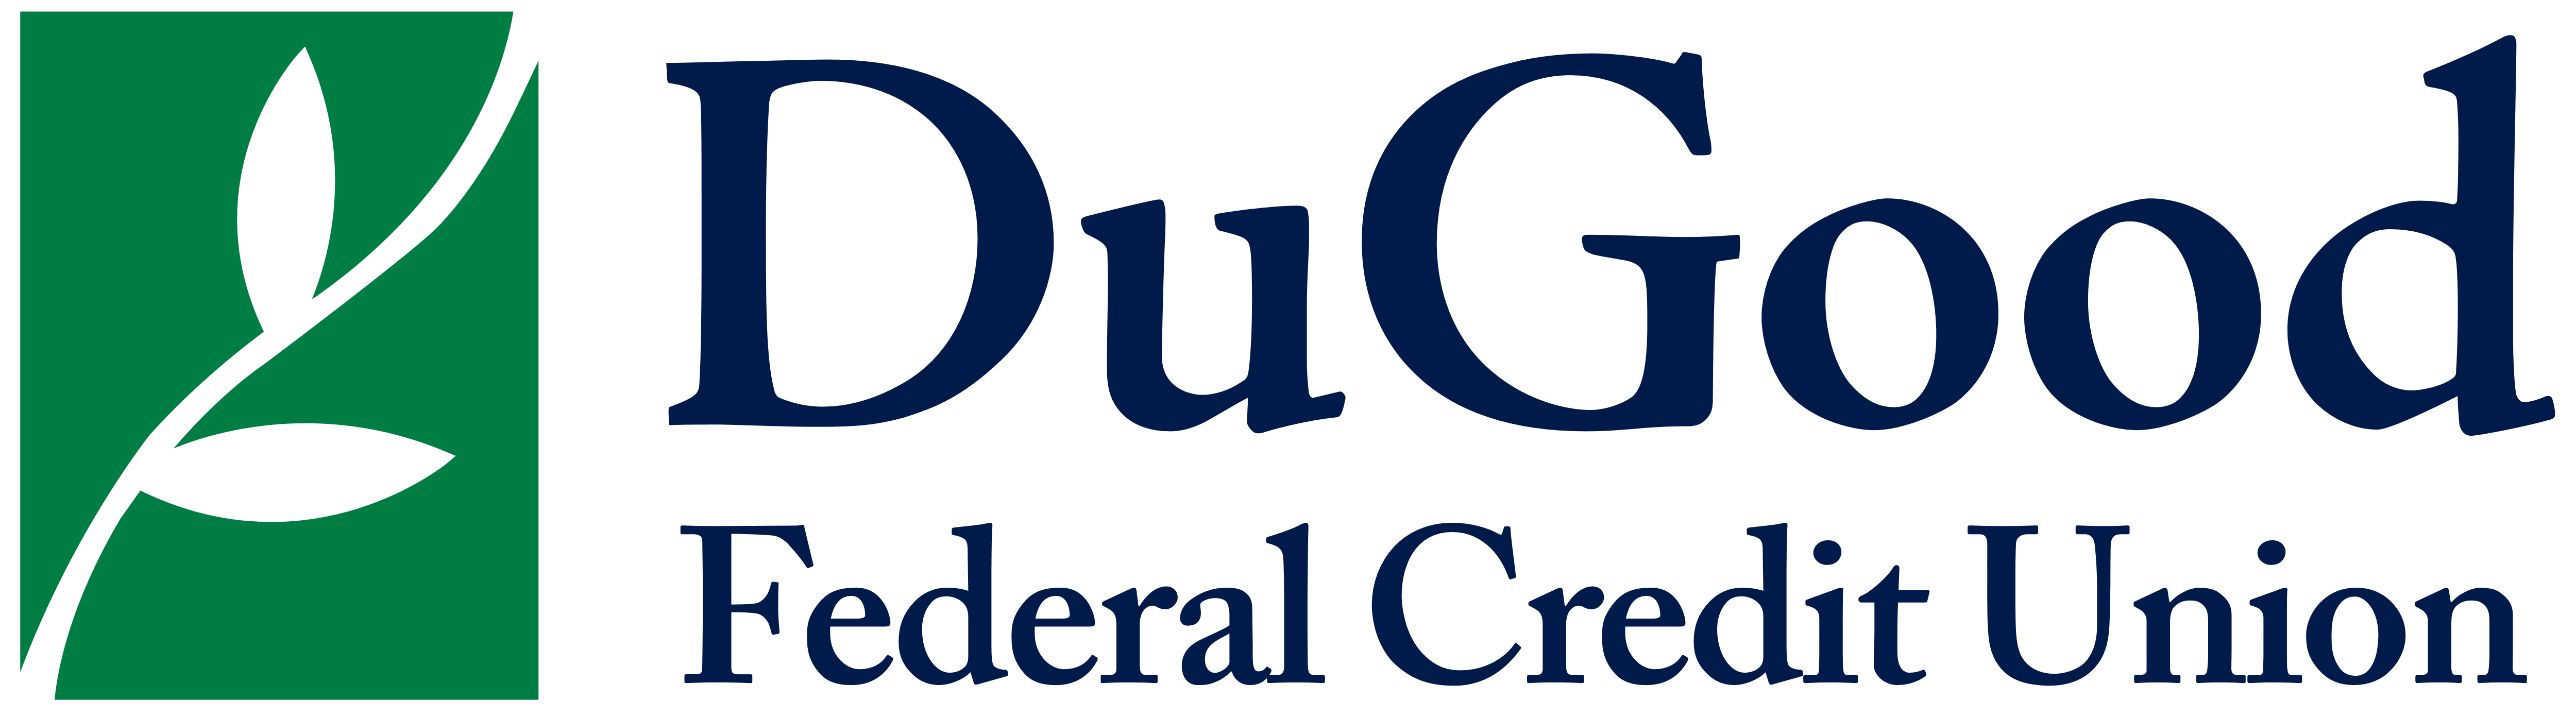 Tdecu Your Credit Union Logo Download Logo Icon Png Svg Images